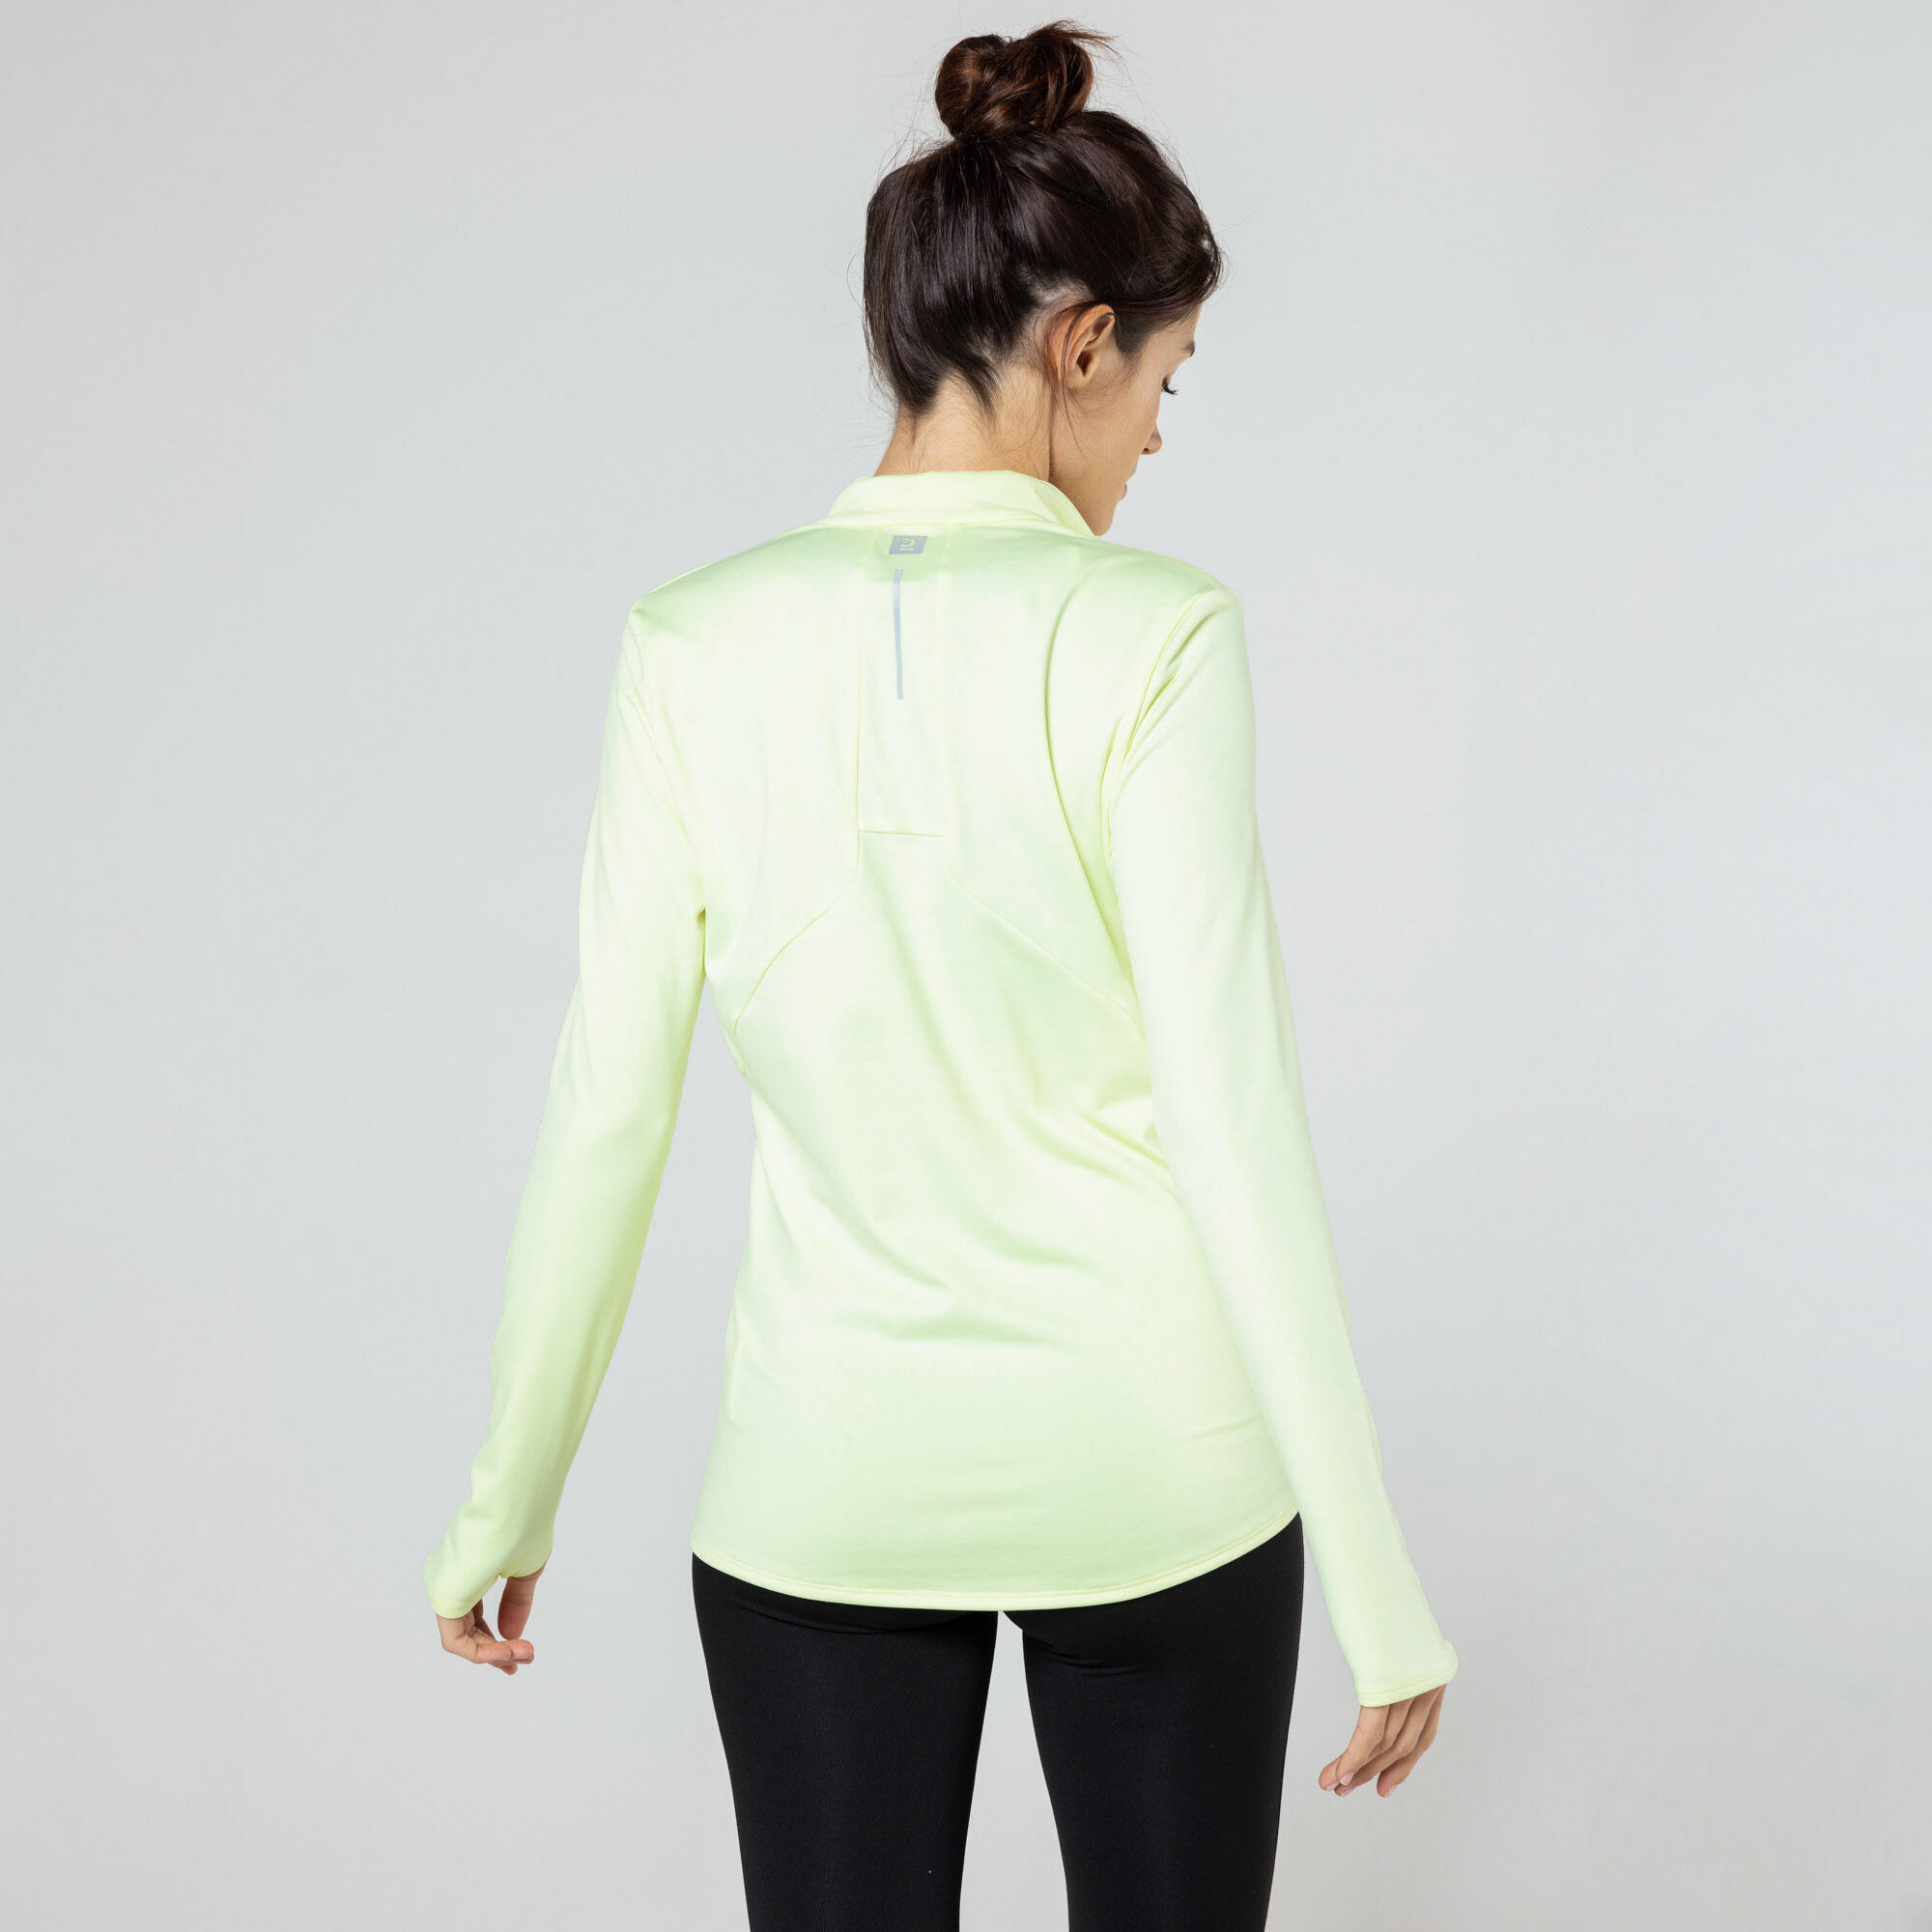 Women's Zip Warm long-sleeved running T-shirt - yellow  2/5